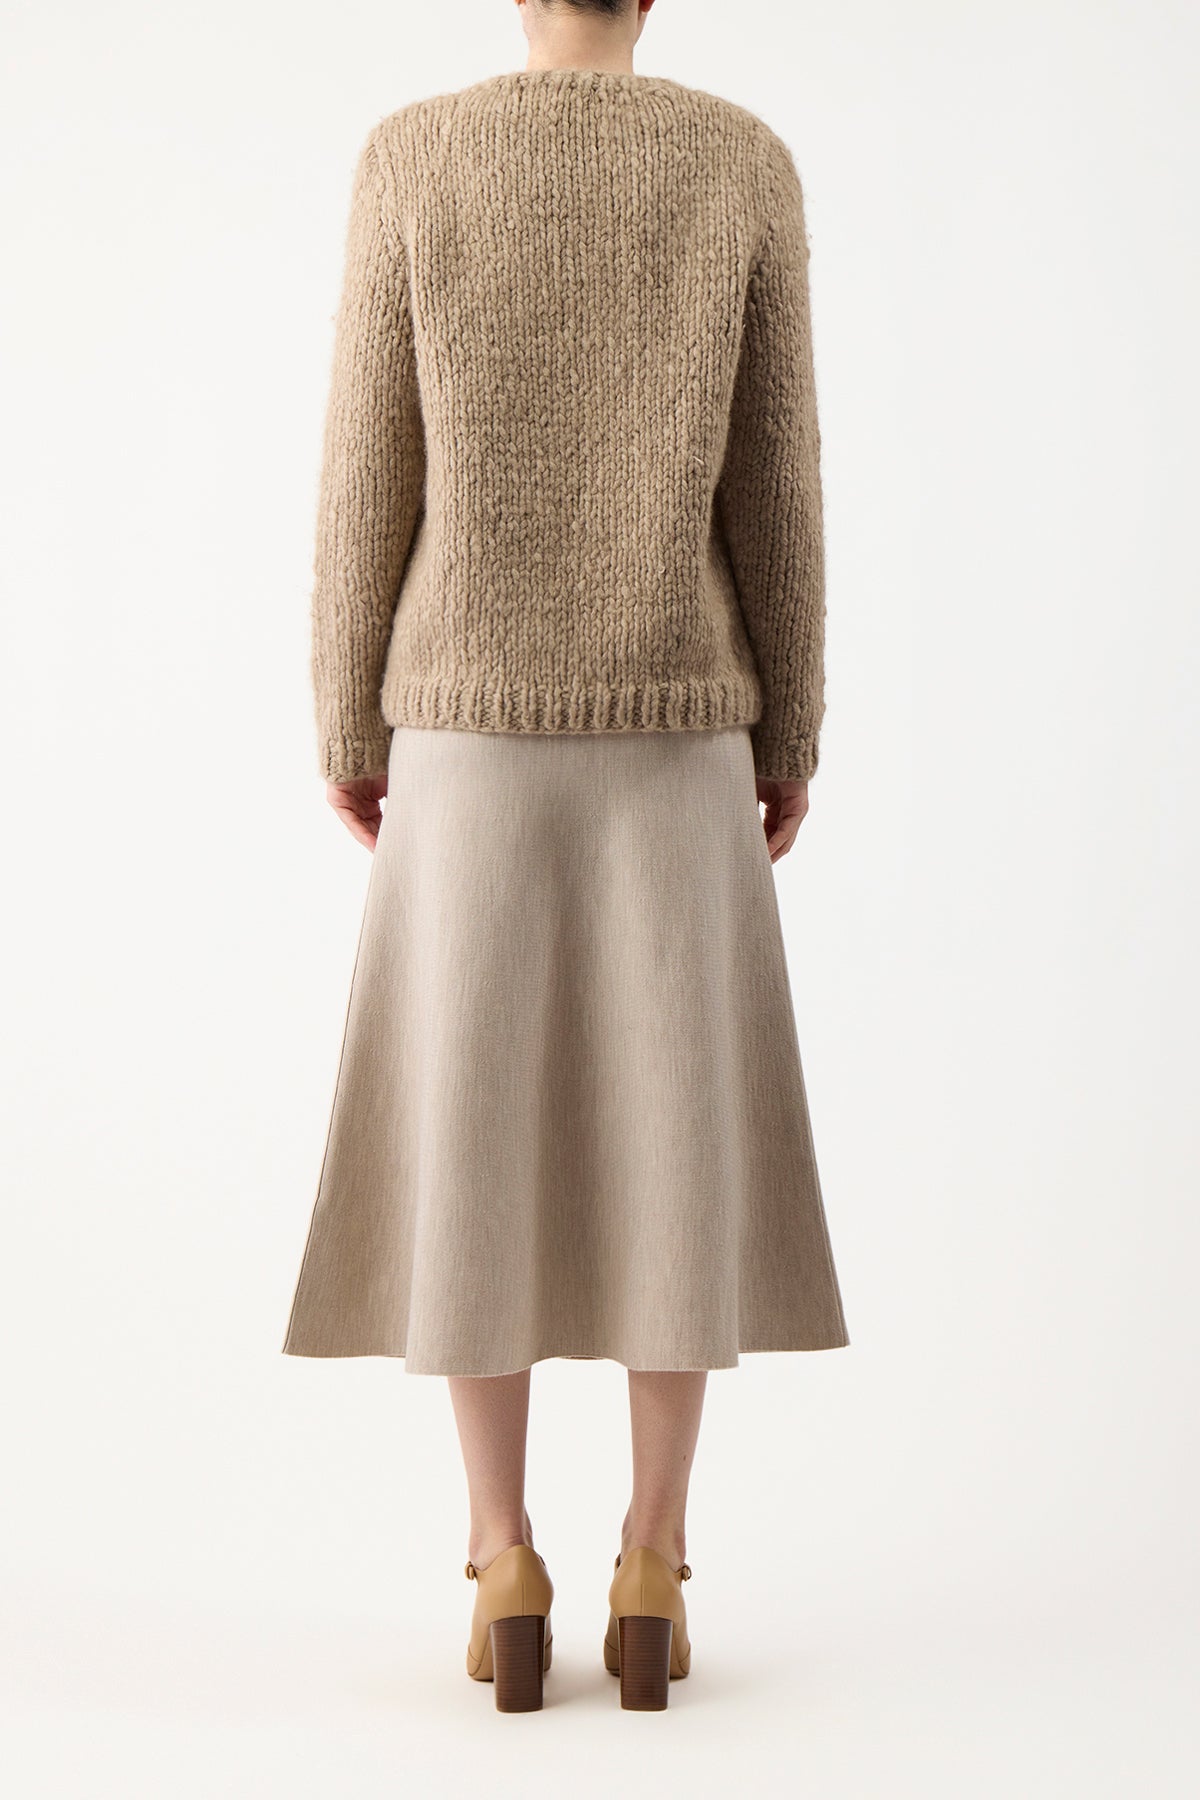 Freddie Knit Skirt in Oatmeal Cashmere Merino Wool